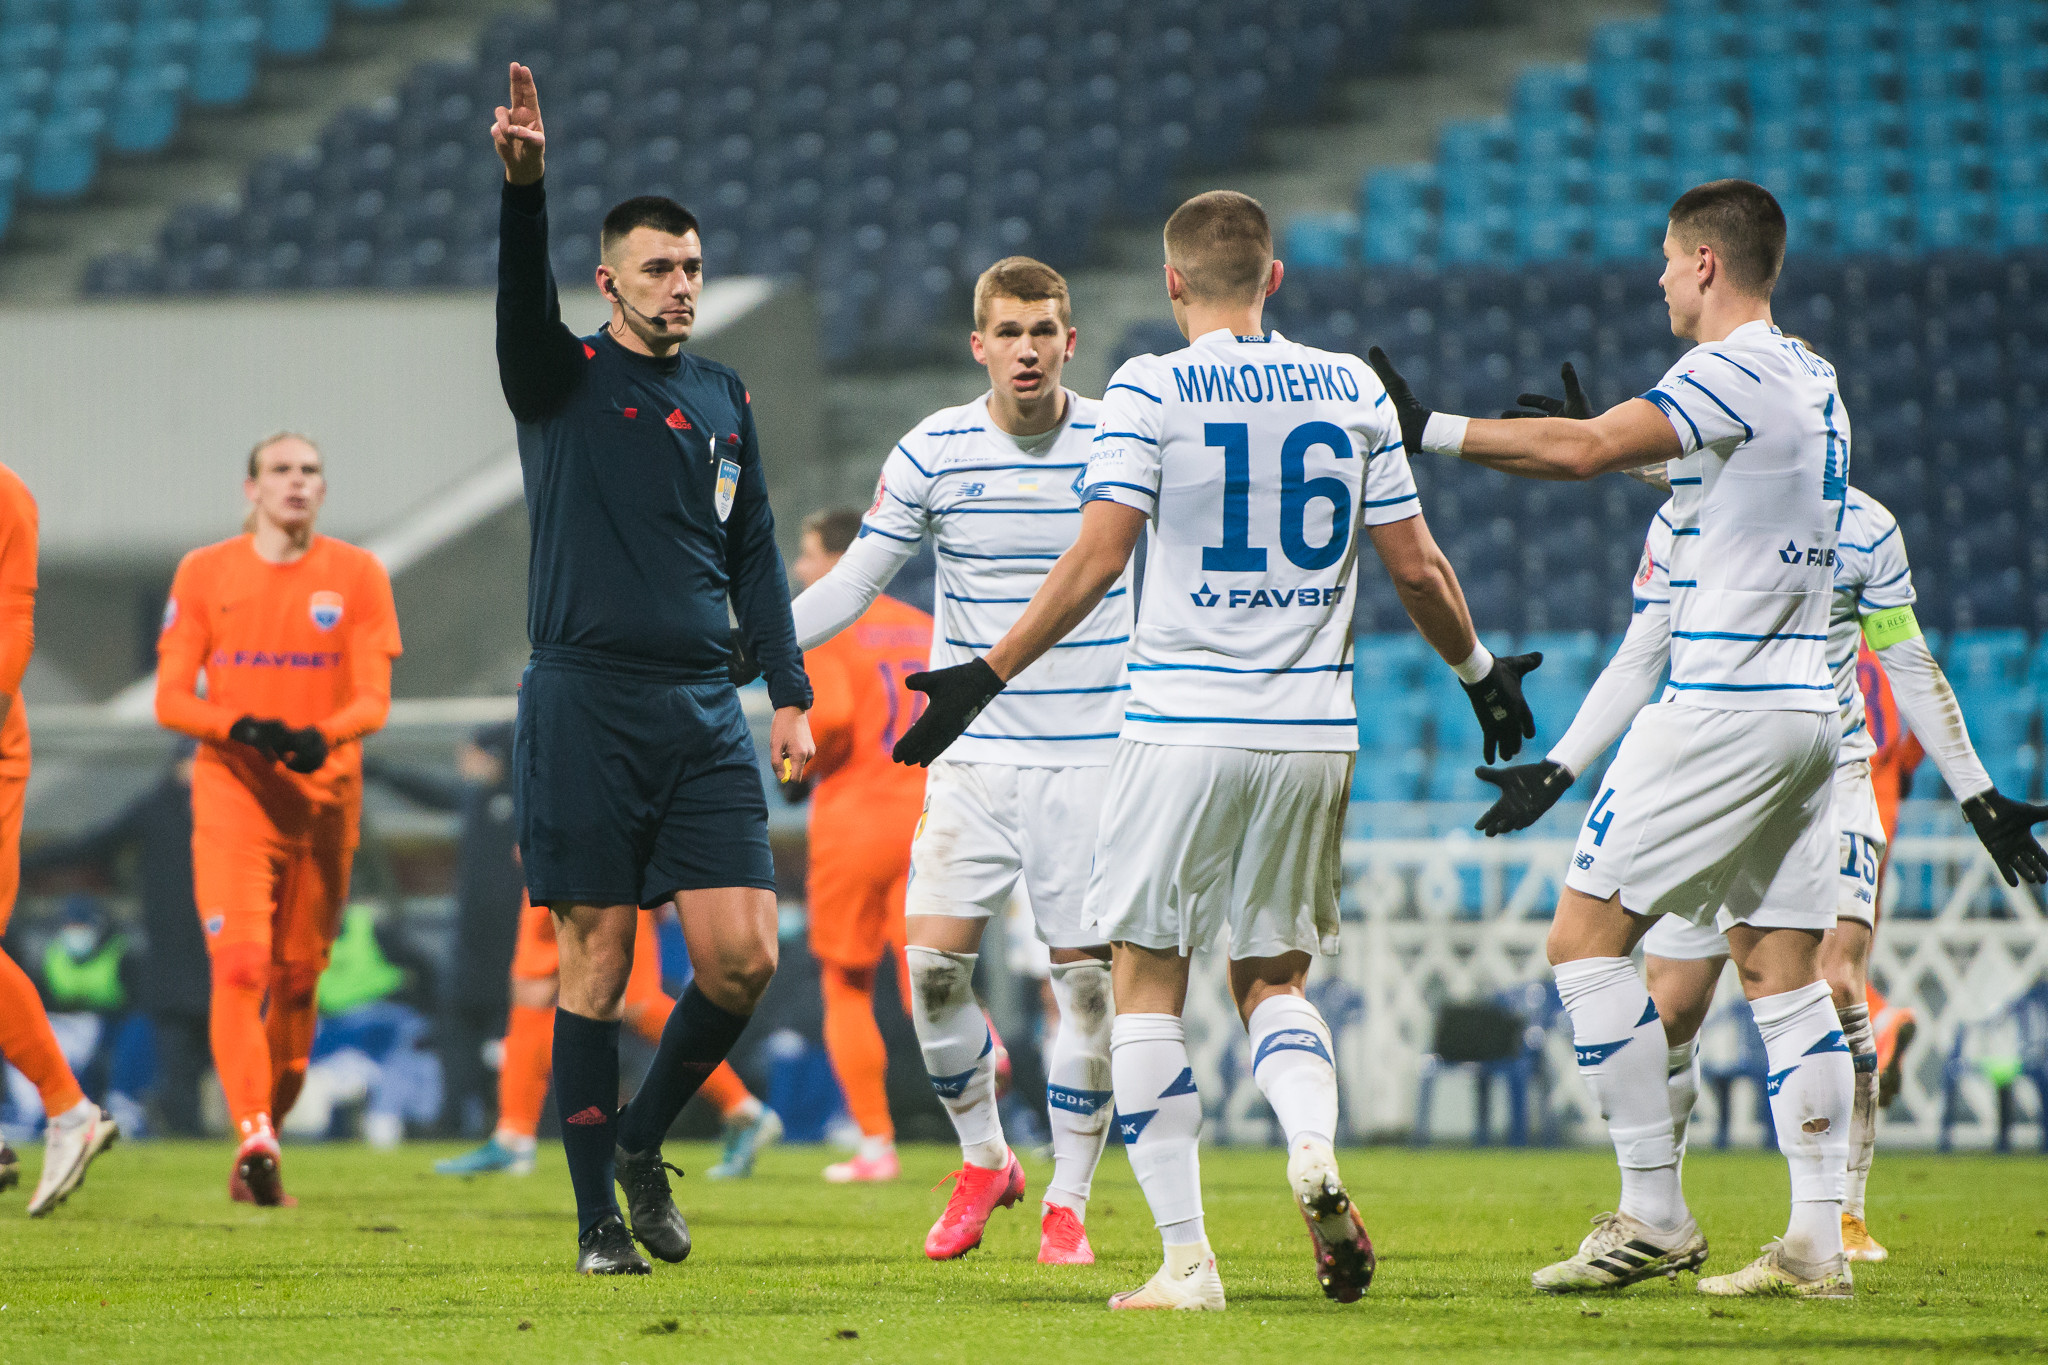 Andriy Kovalenko – Mariupol vs Dynamo match referee